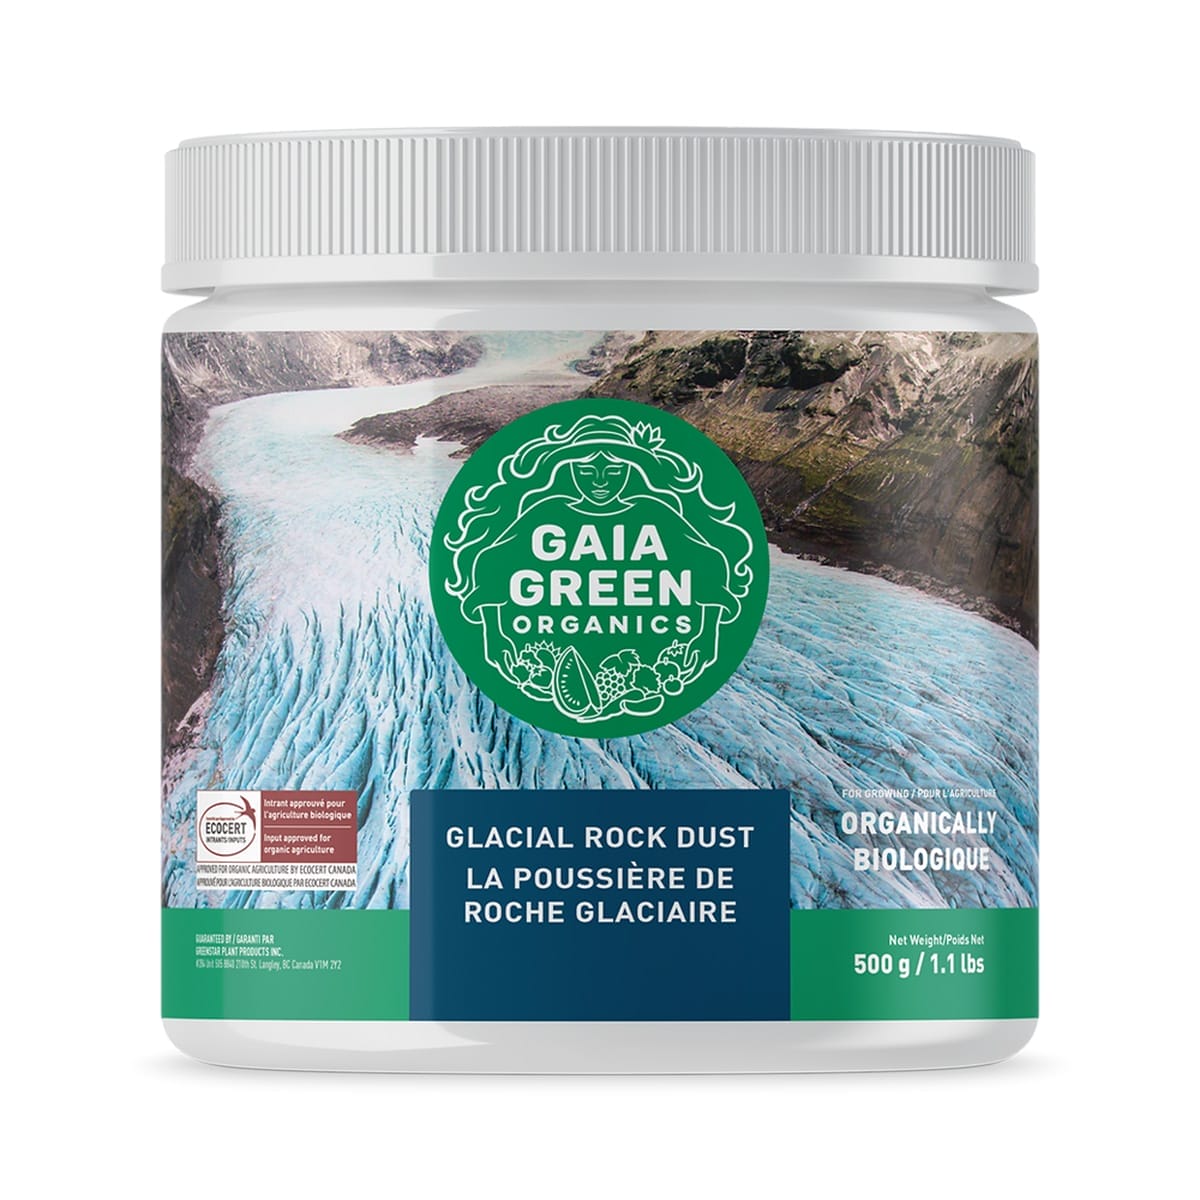 Gaia Green Organics Glacial Rock Dust 500g